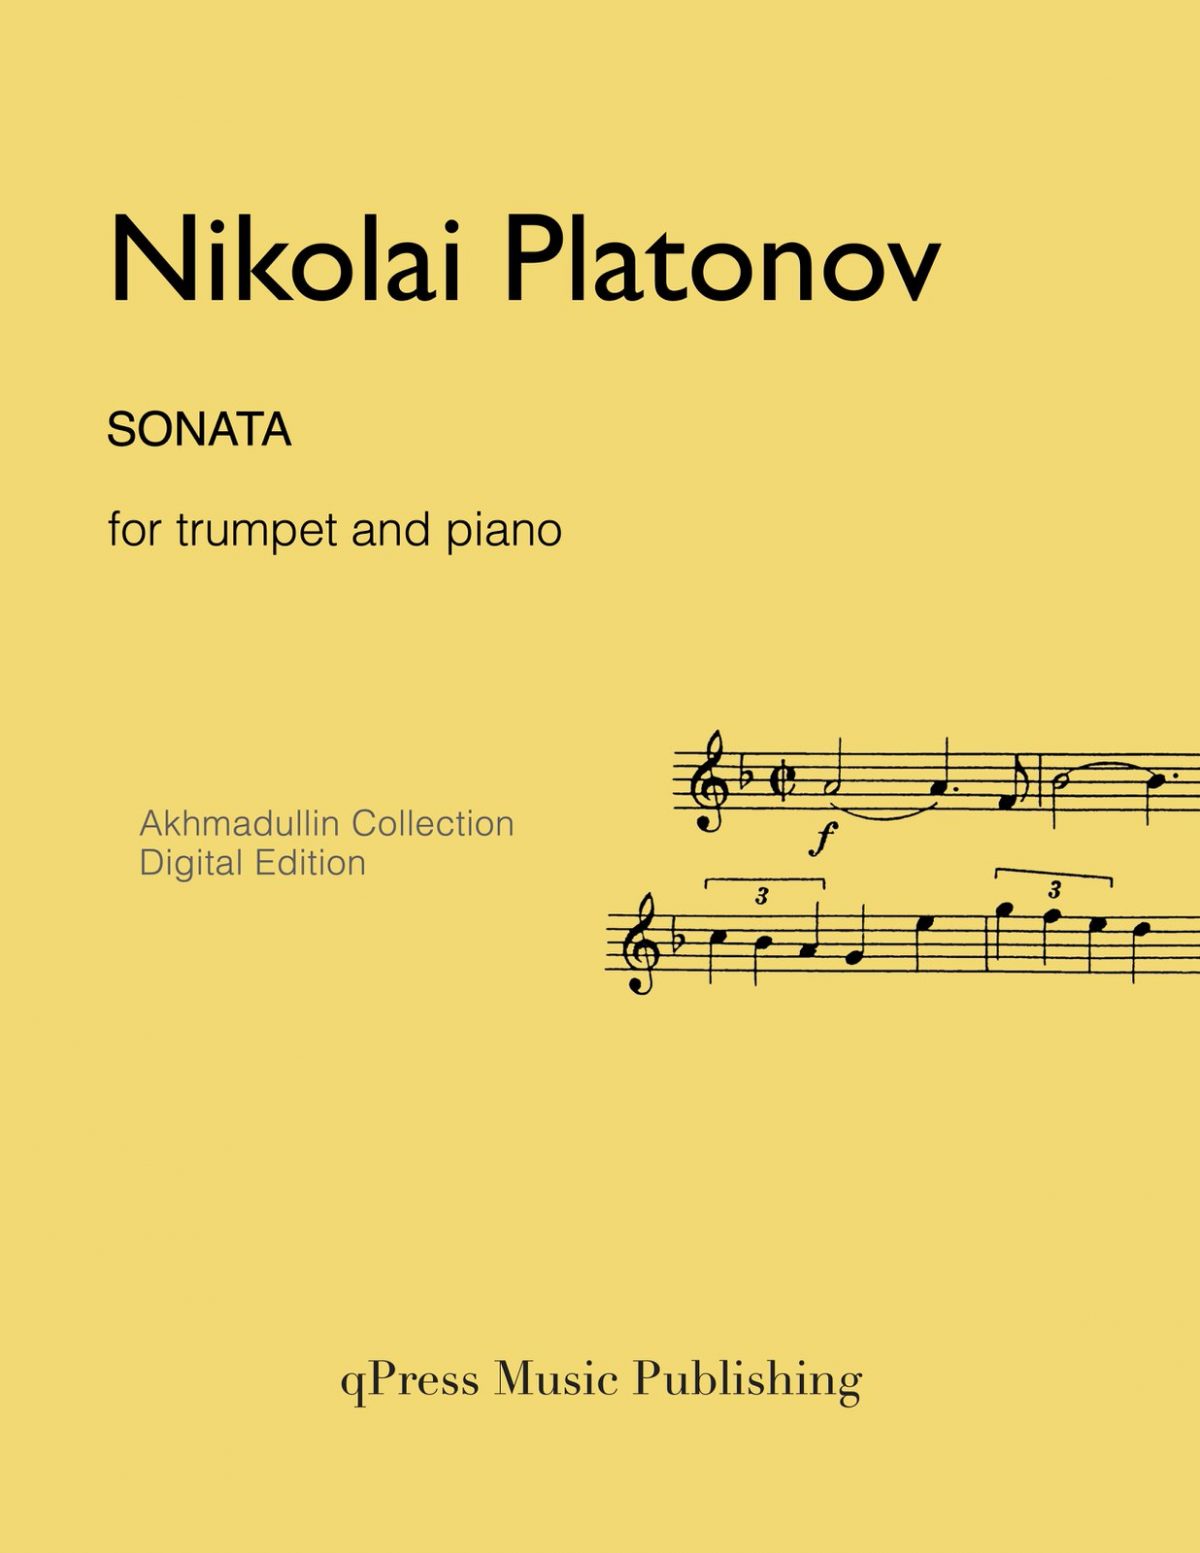 Platonov, Sonata (Score and Part)-p01